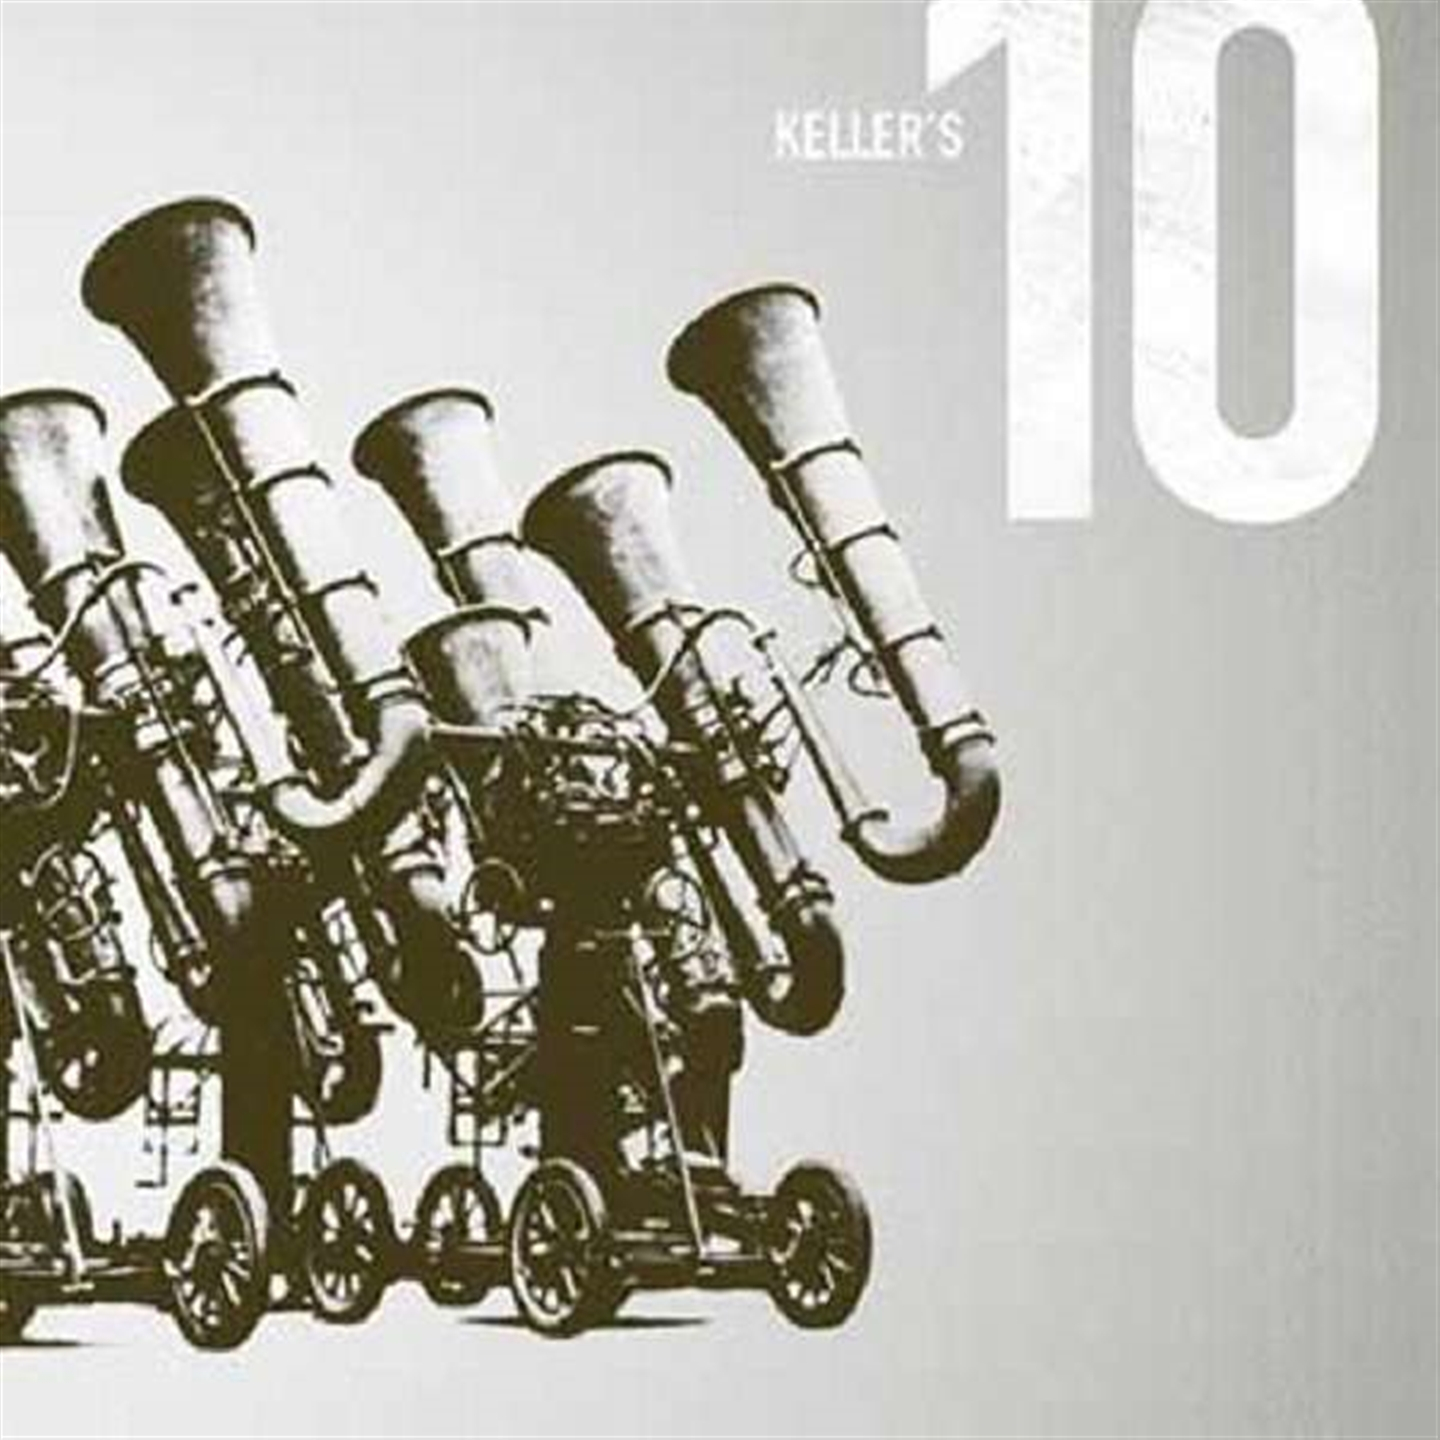 KELLER'S 10